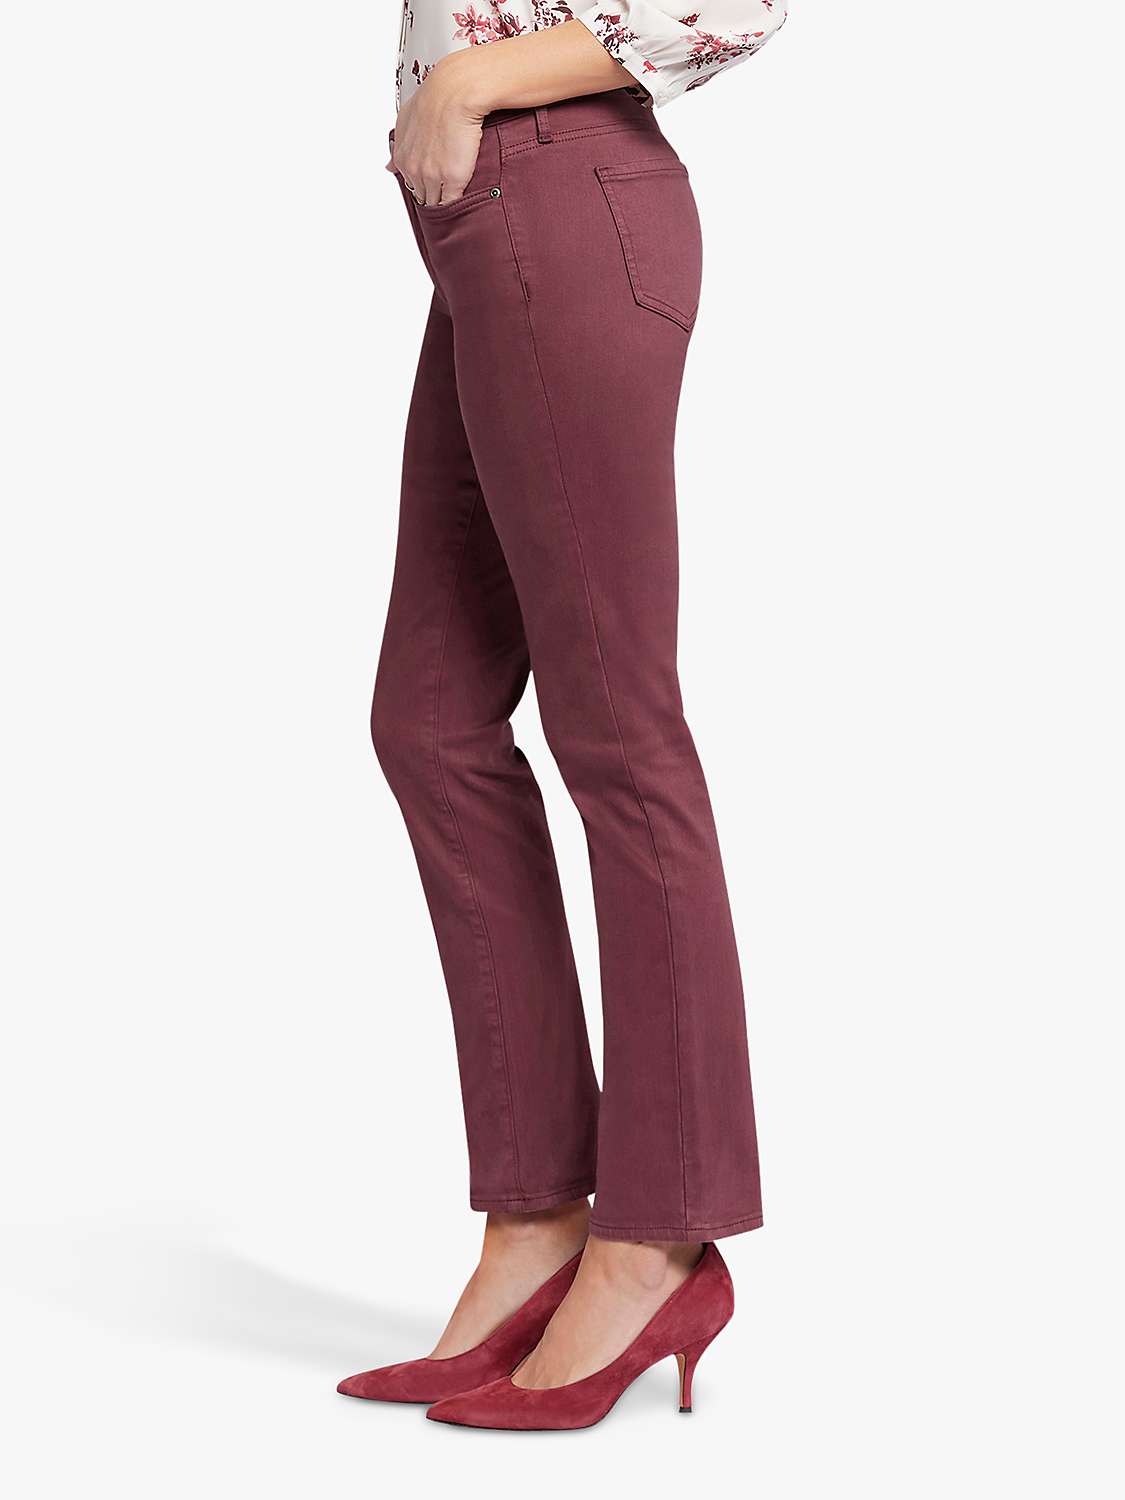 Buy NYDJ Sheri Slim Ankle Length Jeans Online at johnlewis.com